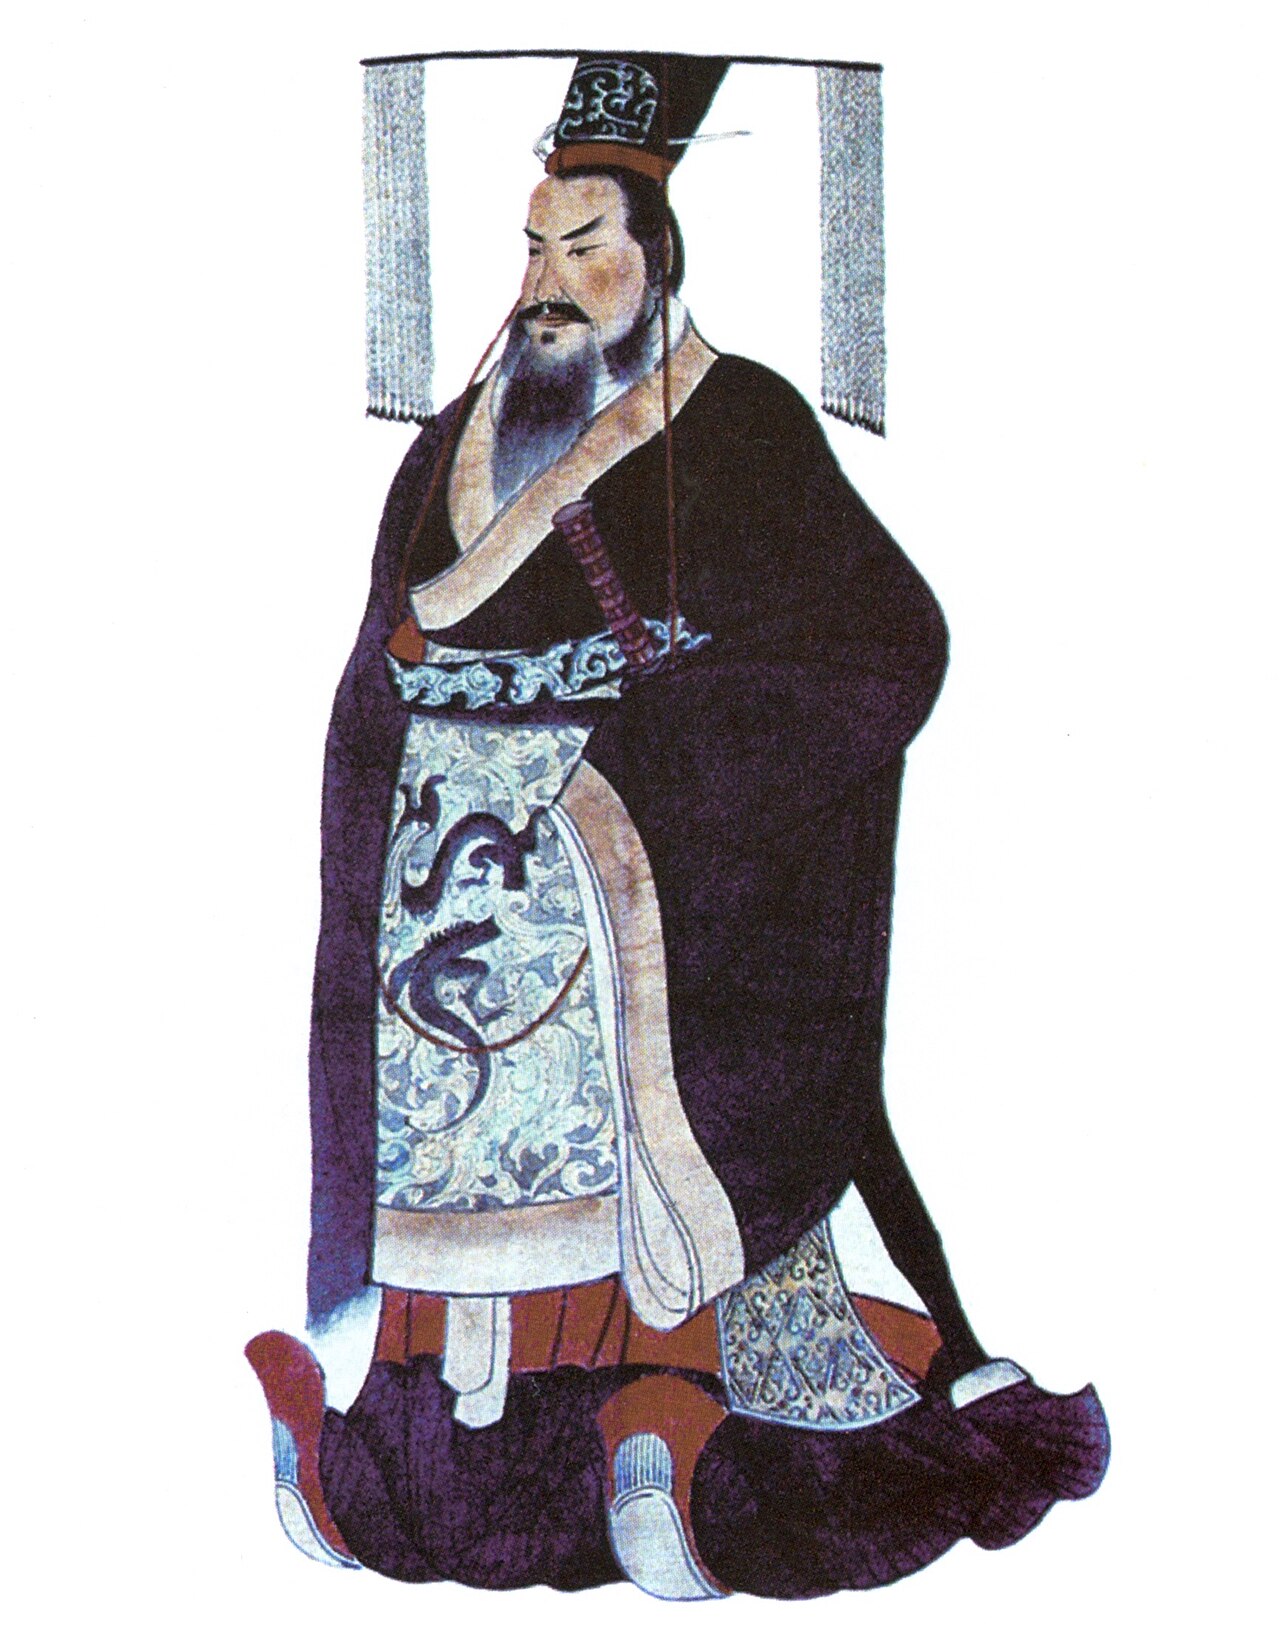 Qin Shi HuangOrigine du nometNaissance et filiation